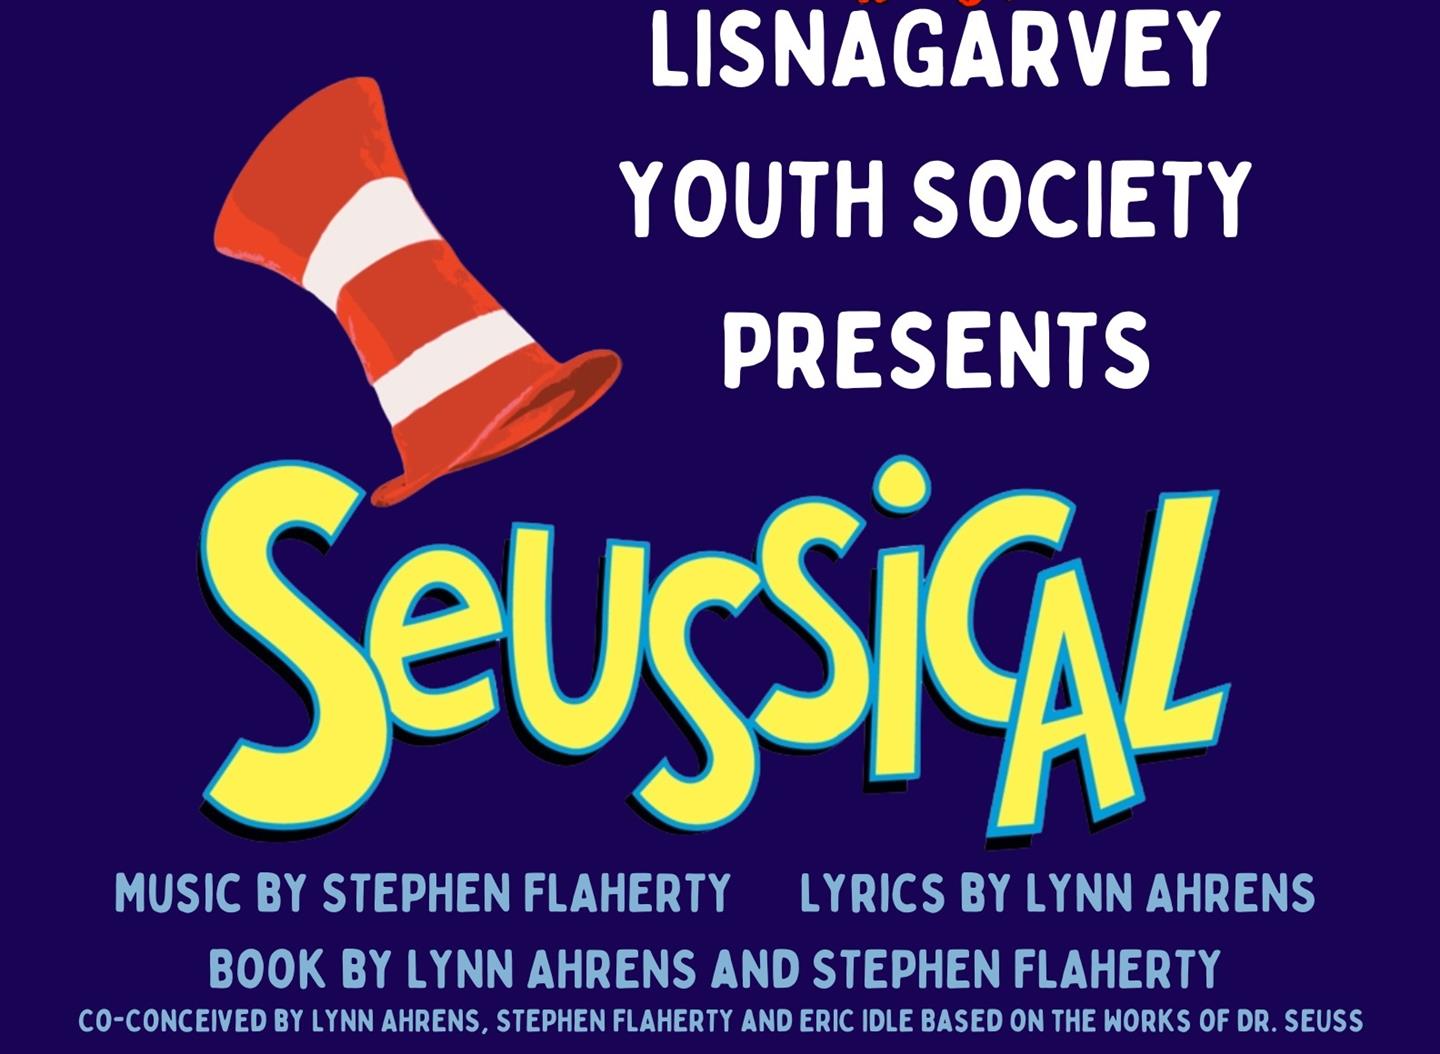 Lisnagarvey Youth Society presents